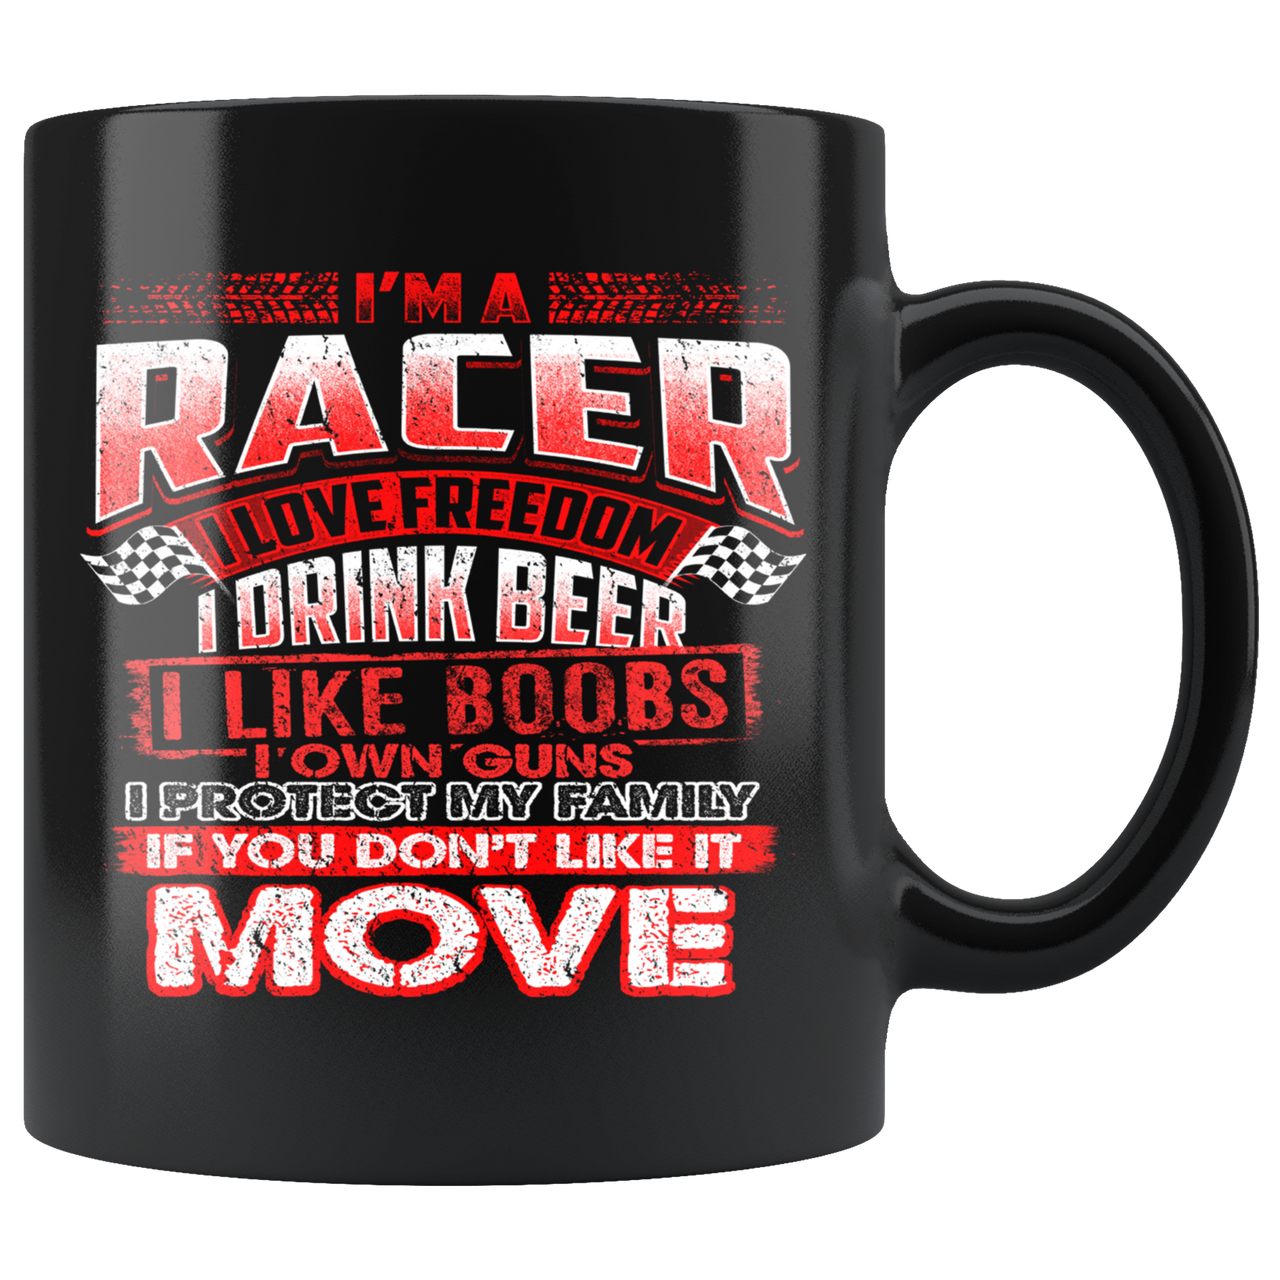 I'm A Racer I Love Freedom I Drink Beer I Love Boobs Mug!